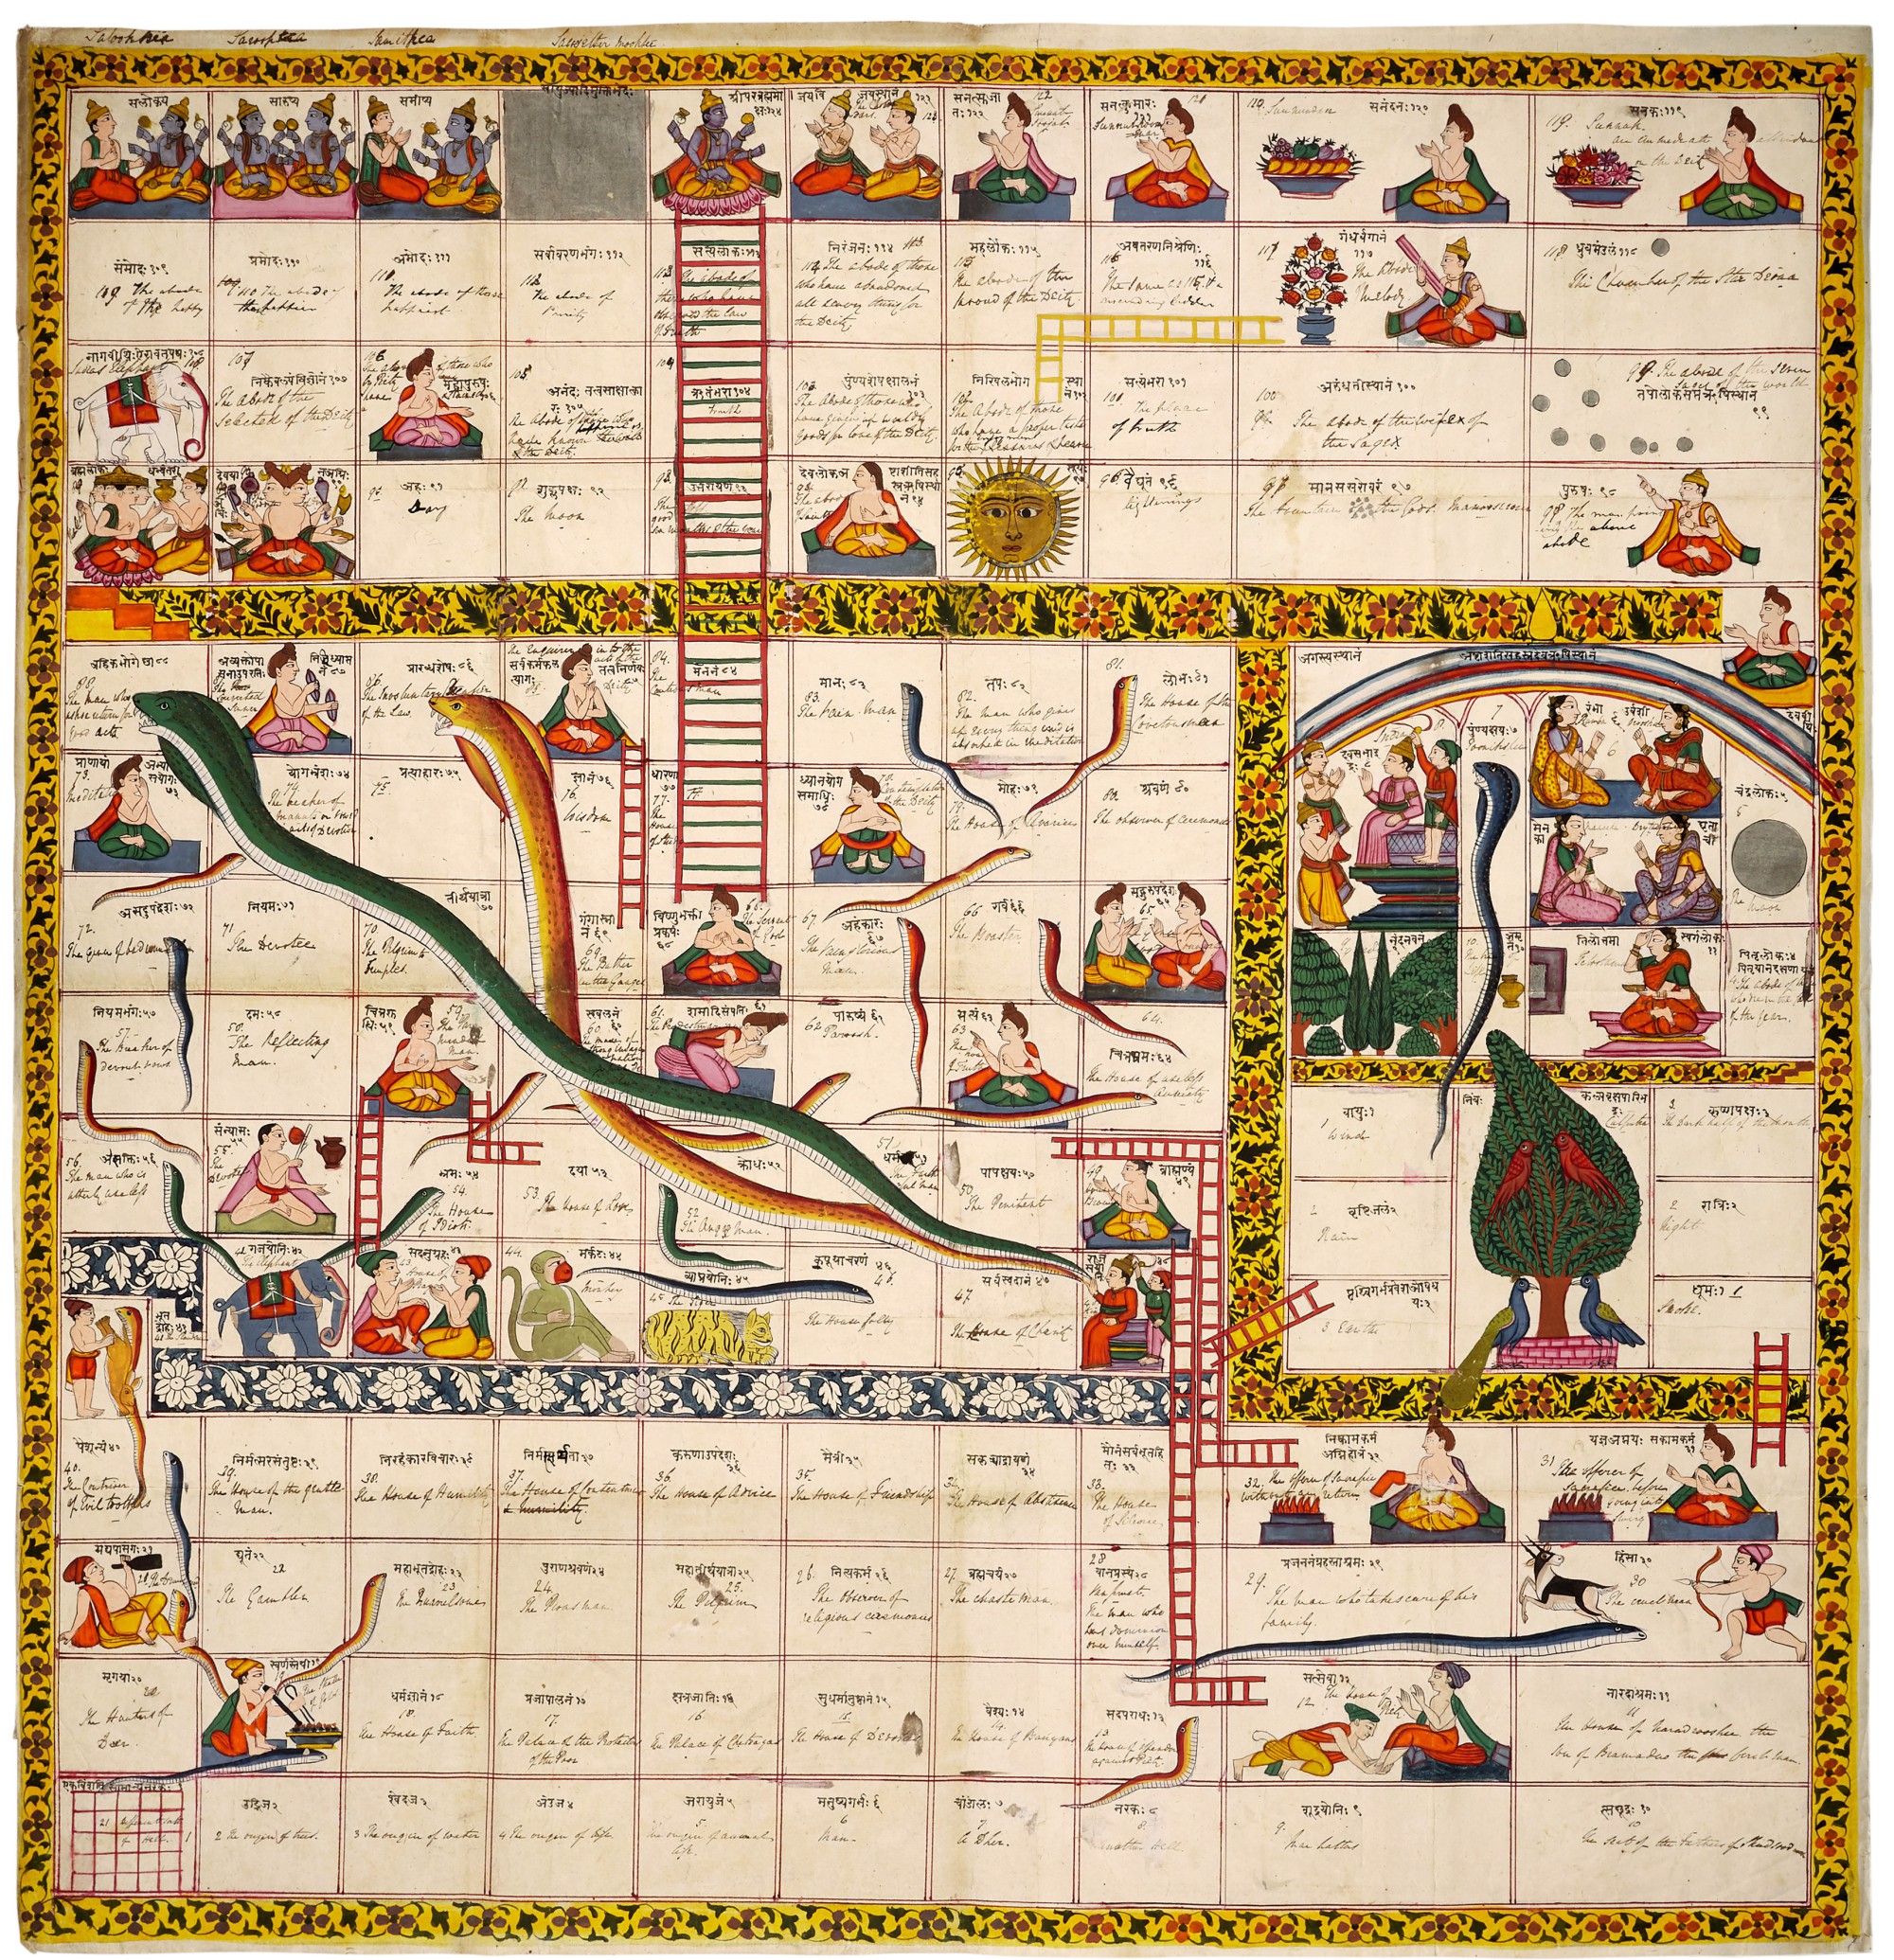 Game of Snakes and Ladders (Moksha Patam), Nagpur, Maharashtra, India | Rare & Old Vintage Games (1800)